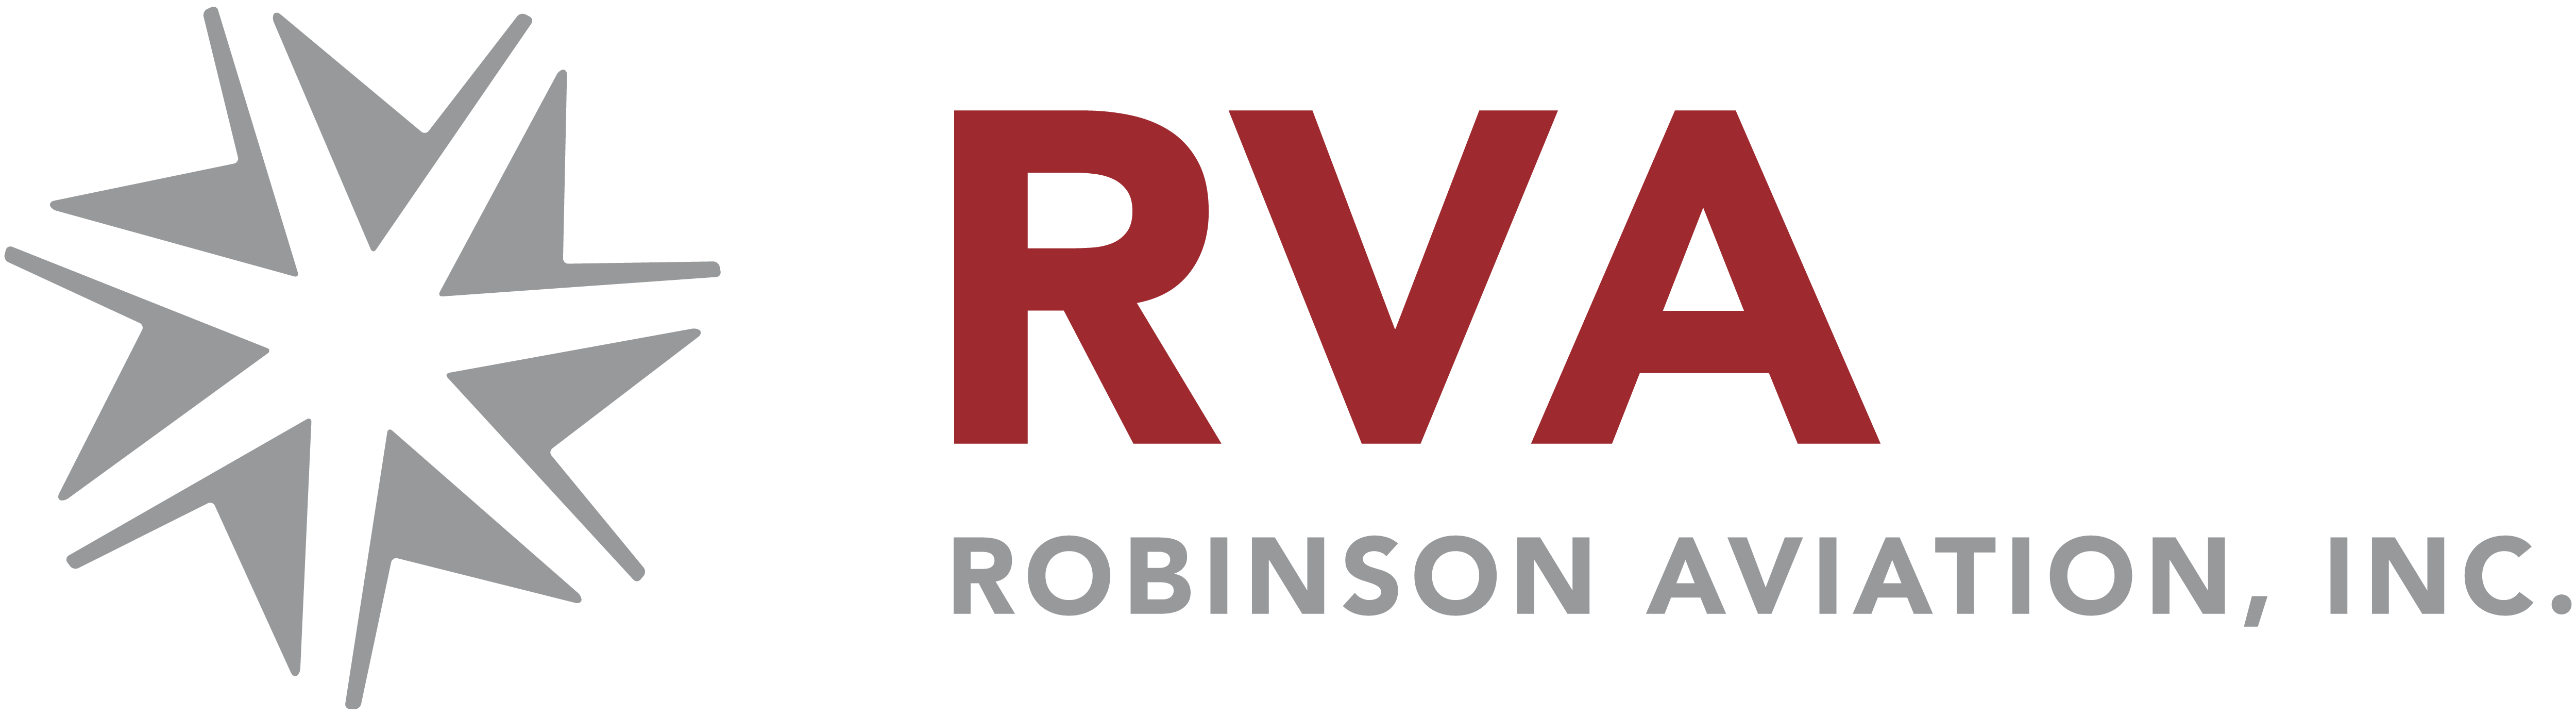 Rádio RVA - Portal RVA